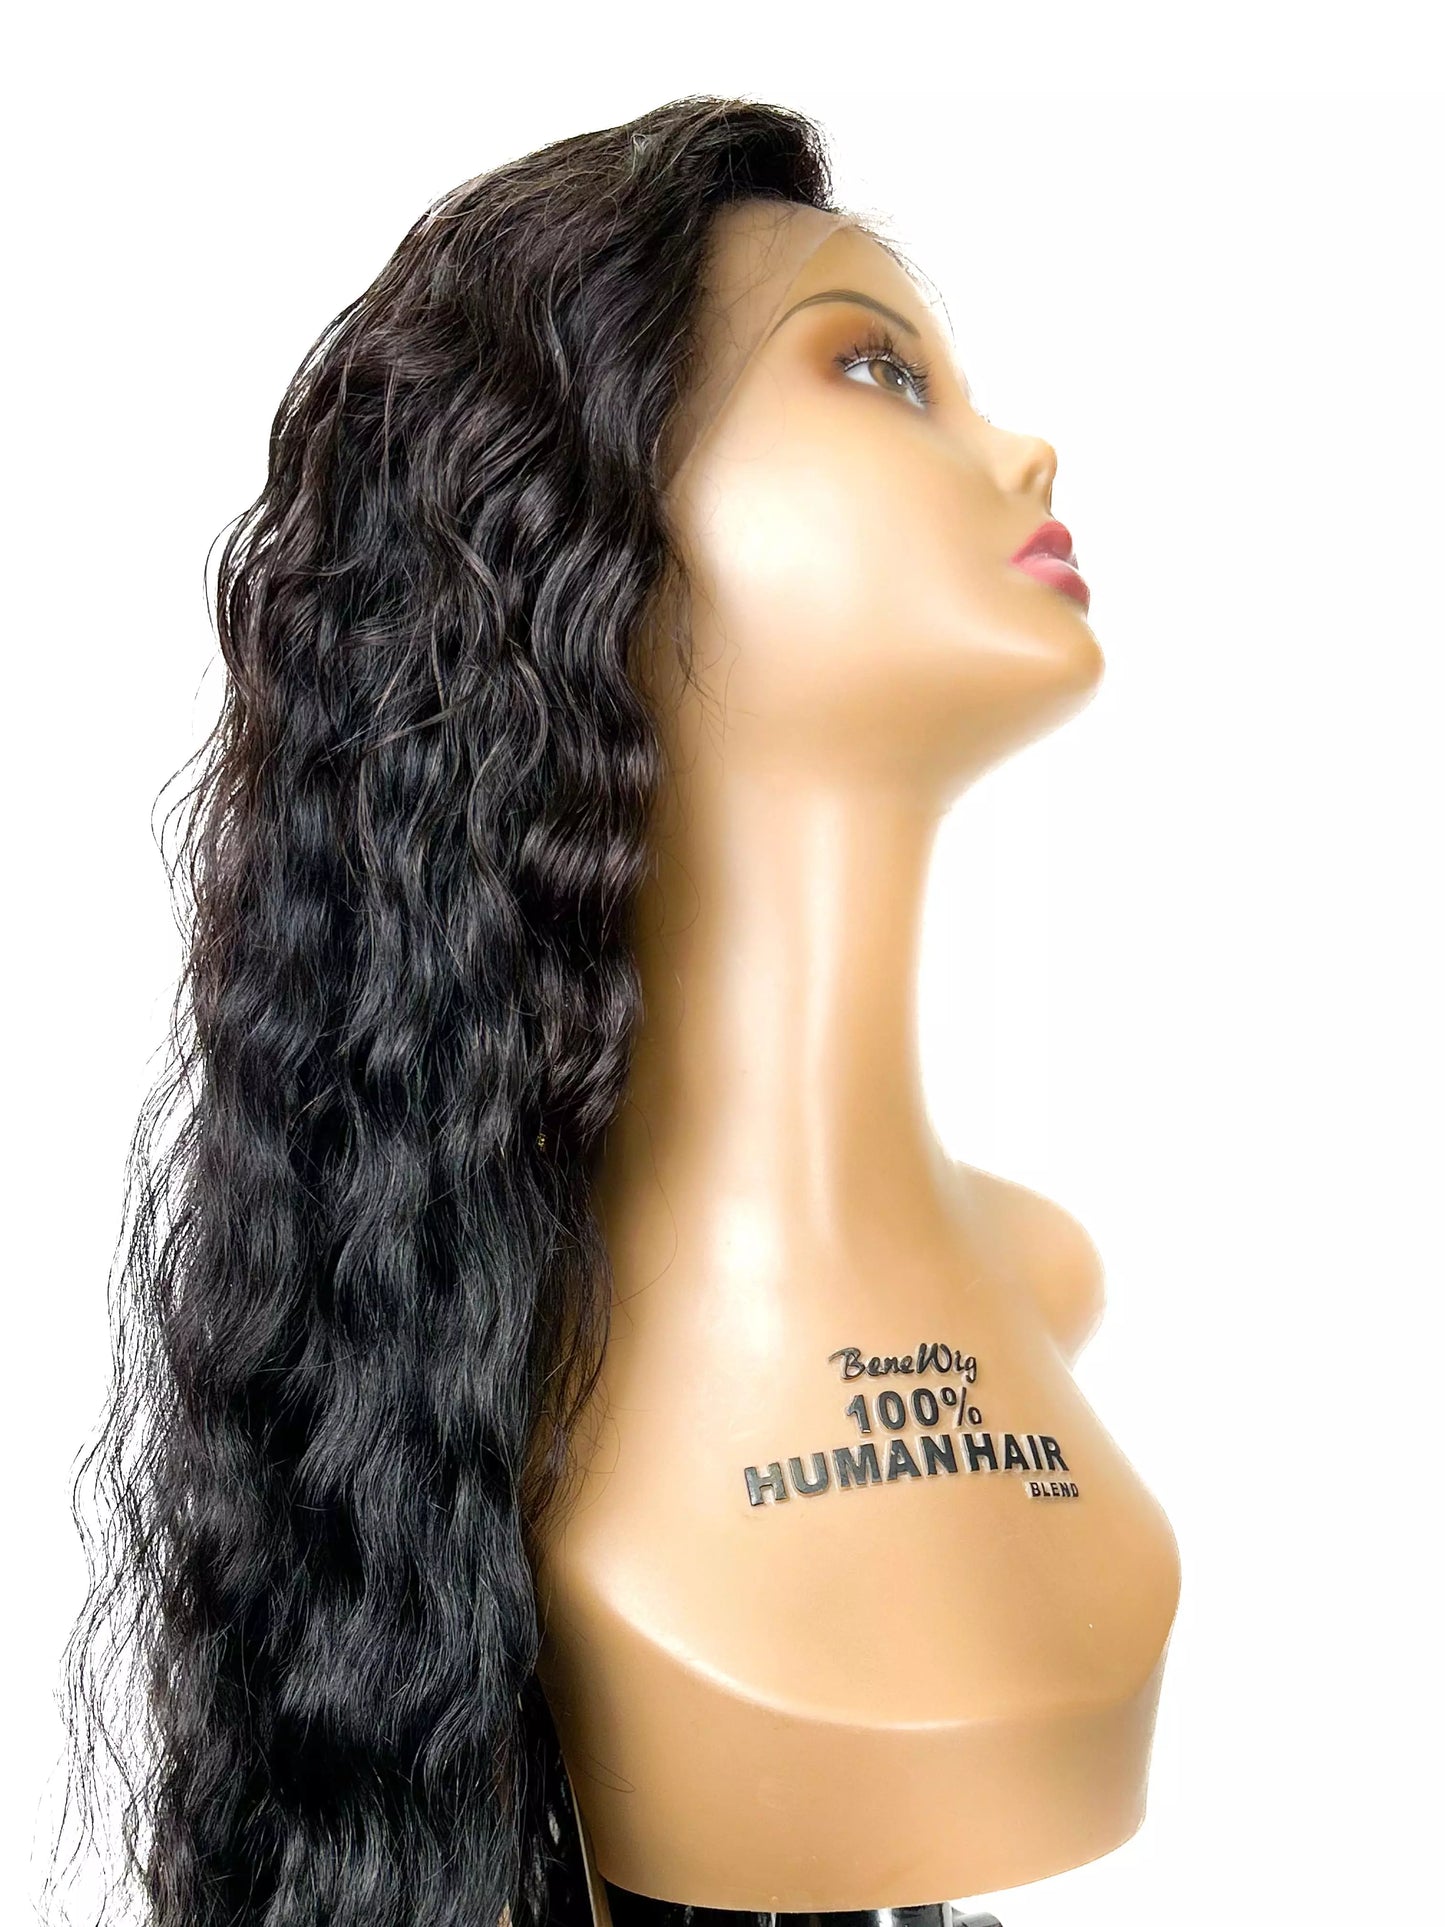 Indu Gold Loose Deep 32" Inch Human Hair Wigs